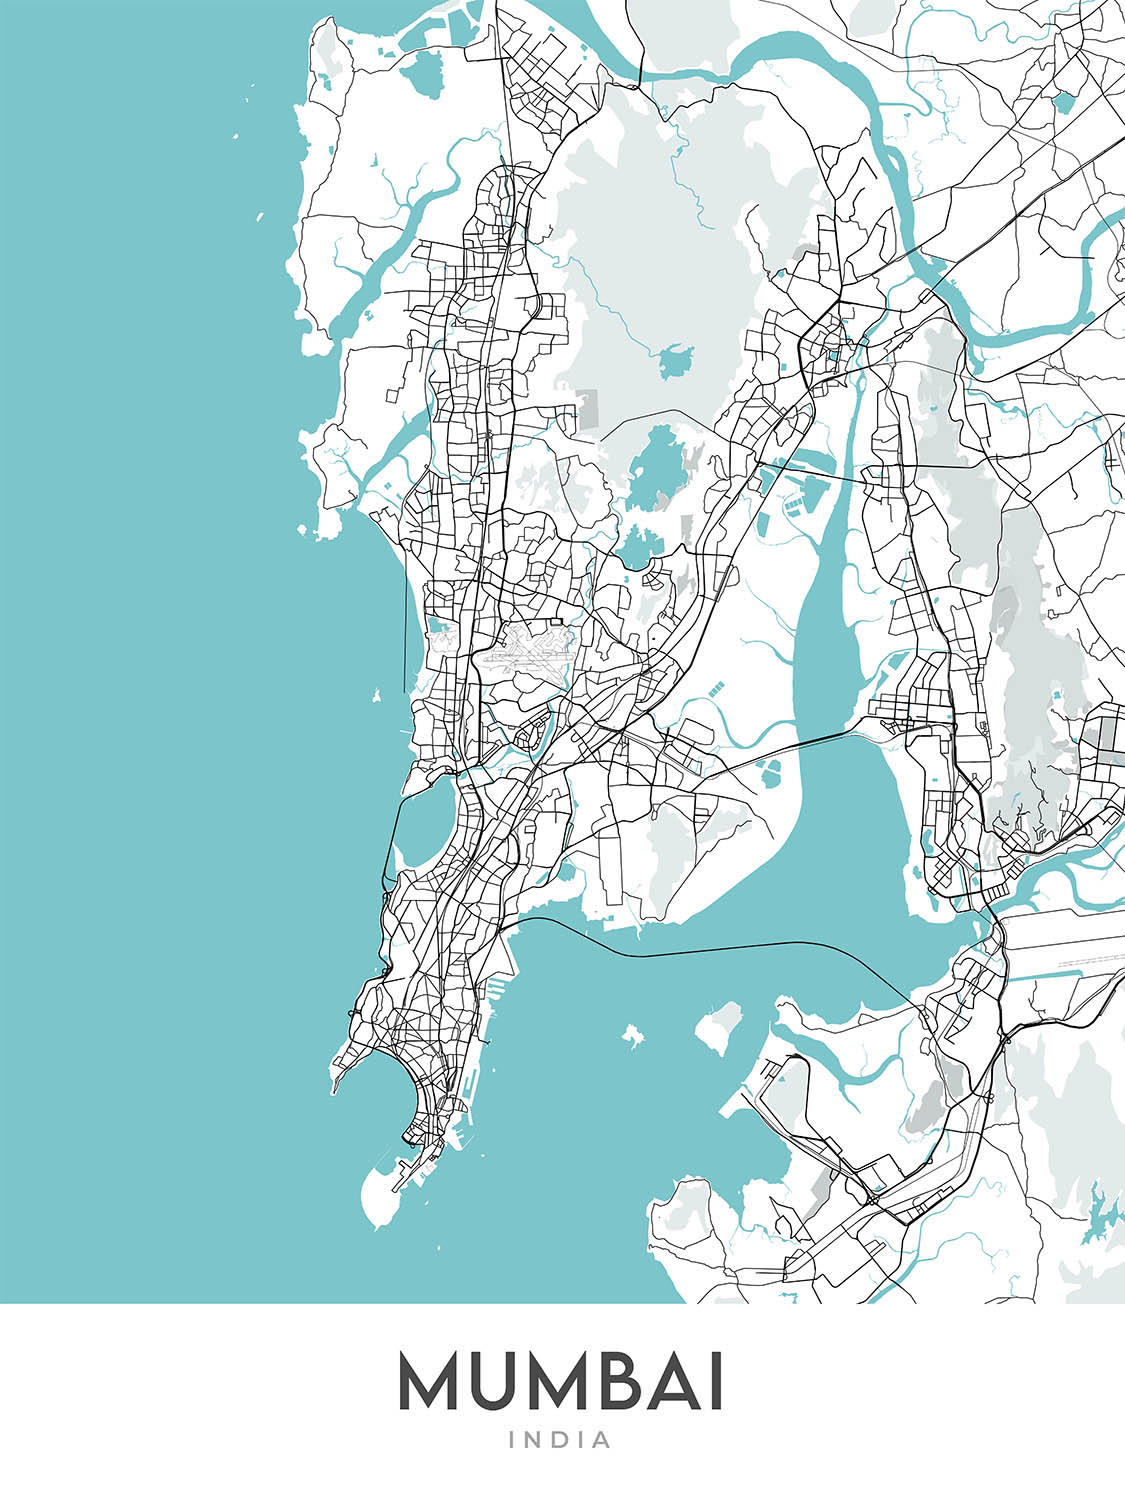 Plan de la ville moderne de Mumbai, Inde : Colaba, Marine Drive, Bandra-Worli Sea Link, Juhu Beach, Powai Lake